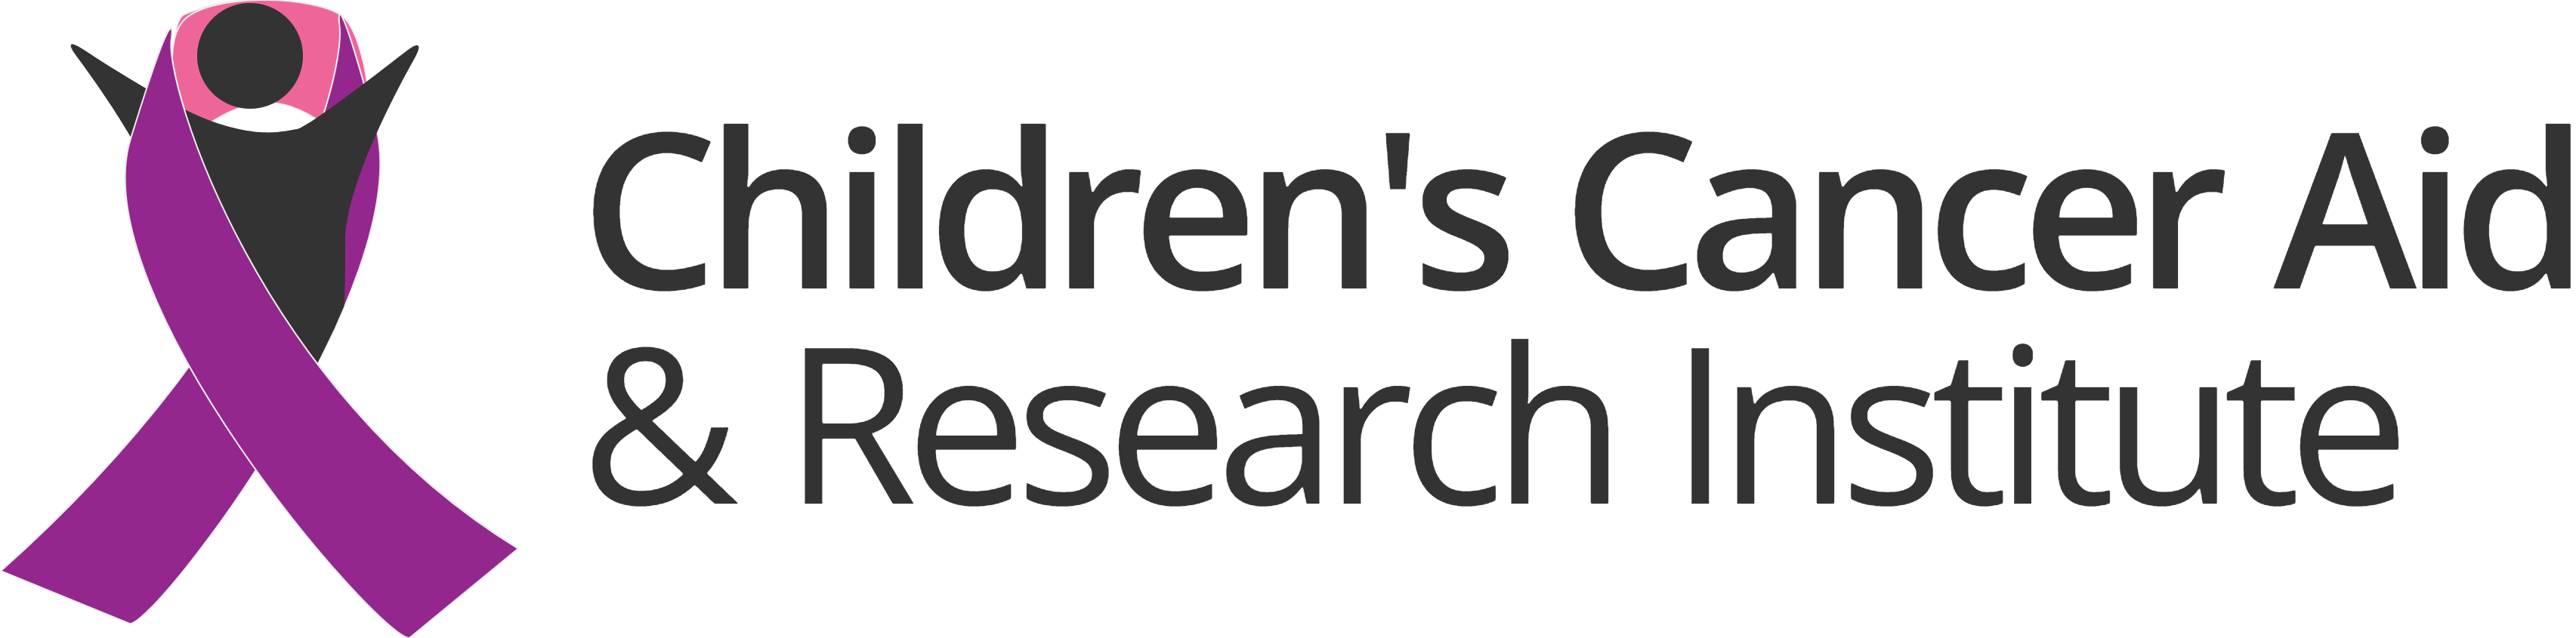 Children's Cancer Aid & Research Institute logo